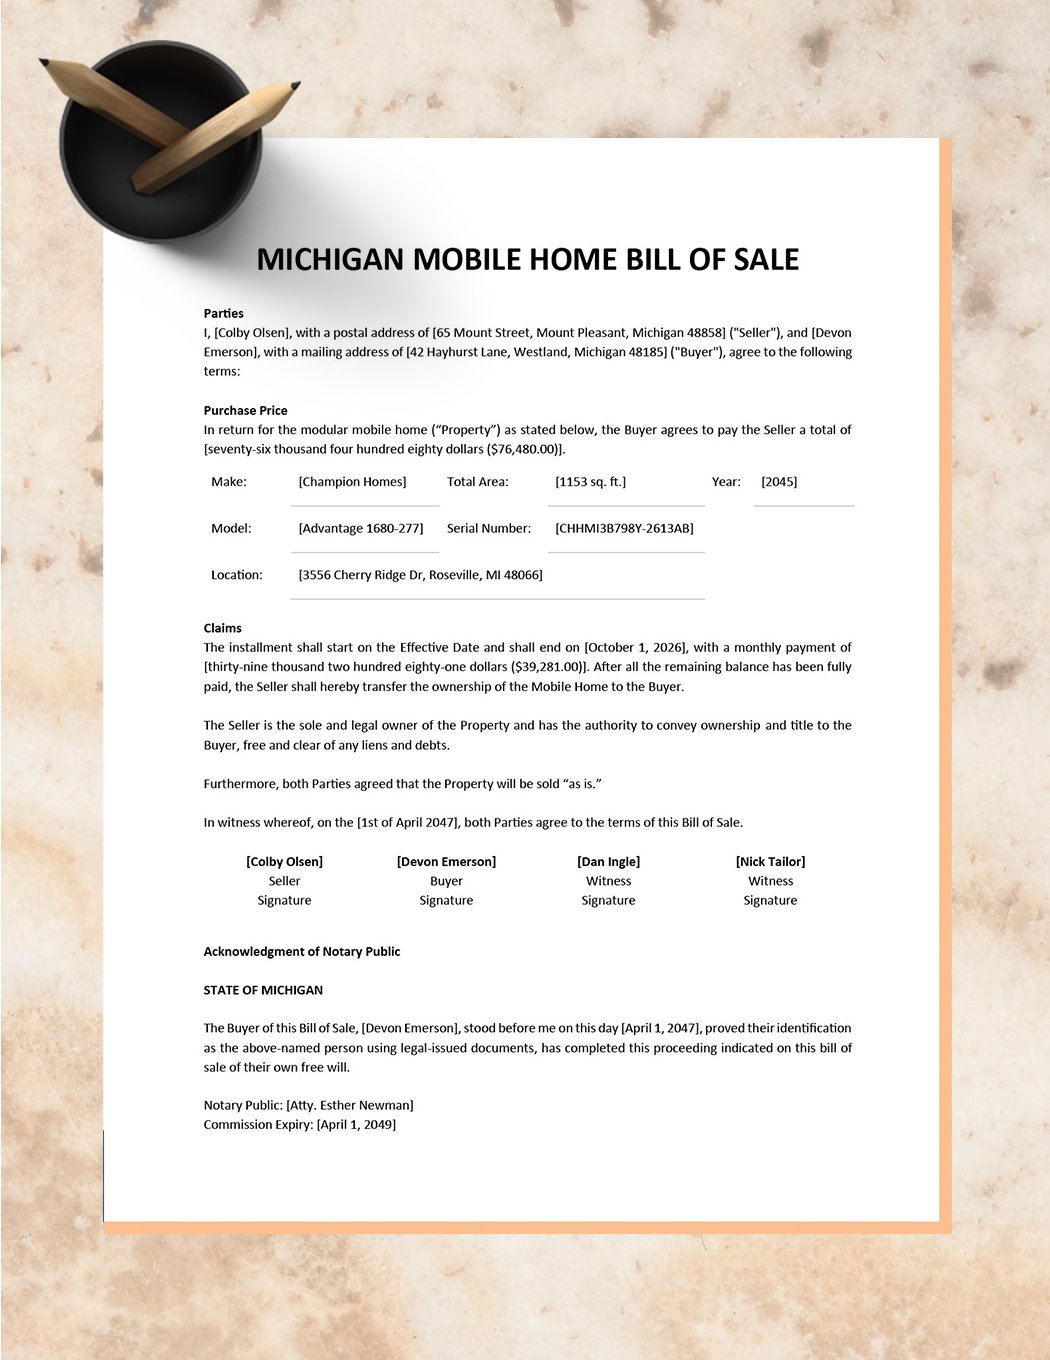 Michigan Mobile Home Bill of Sale Template